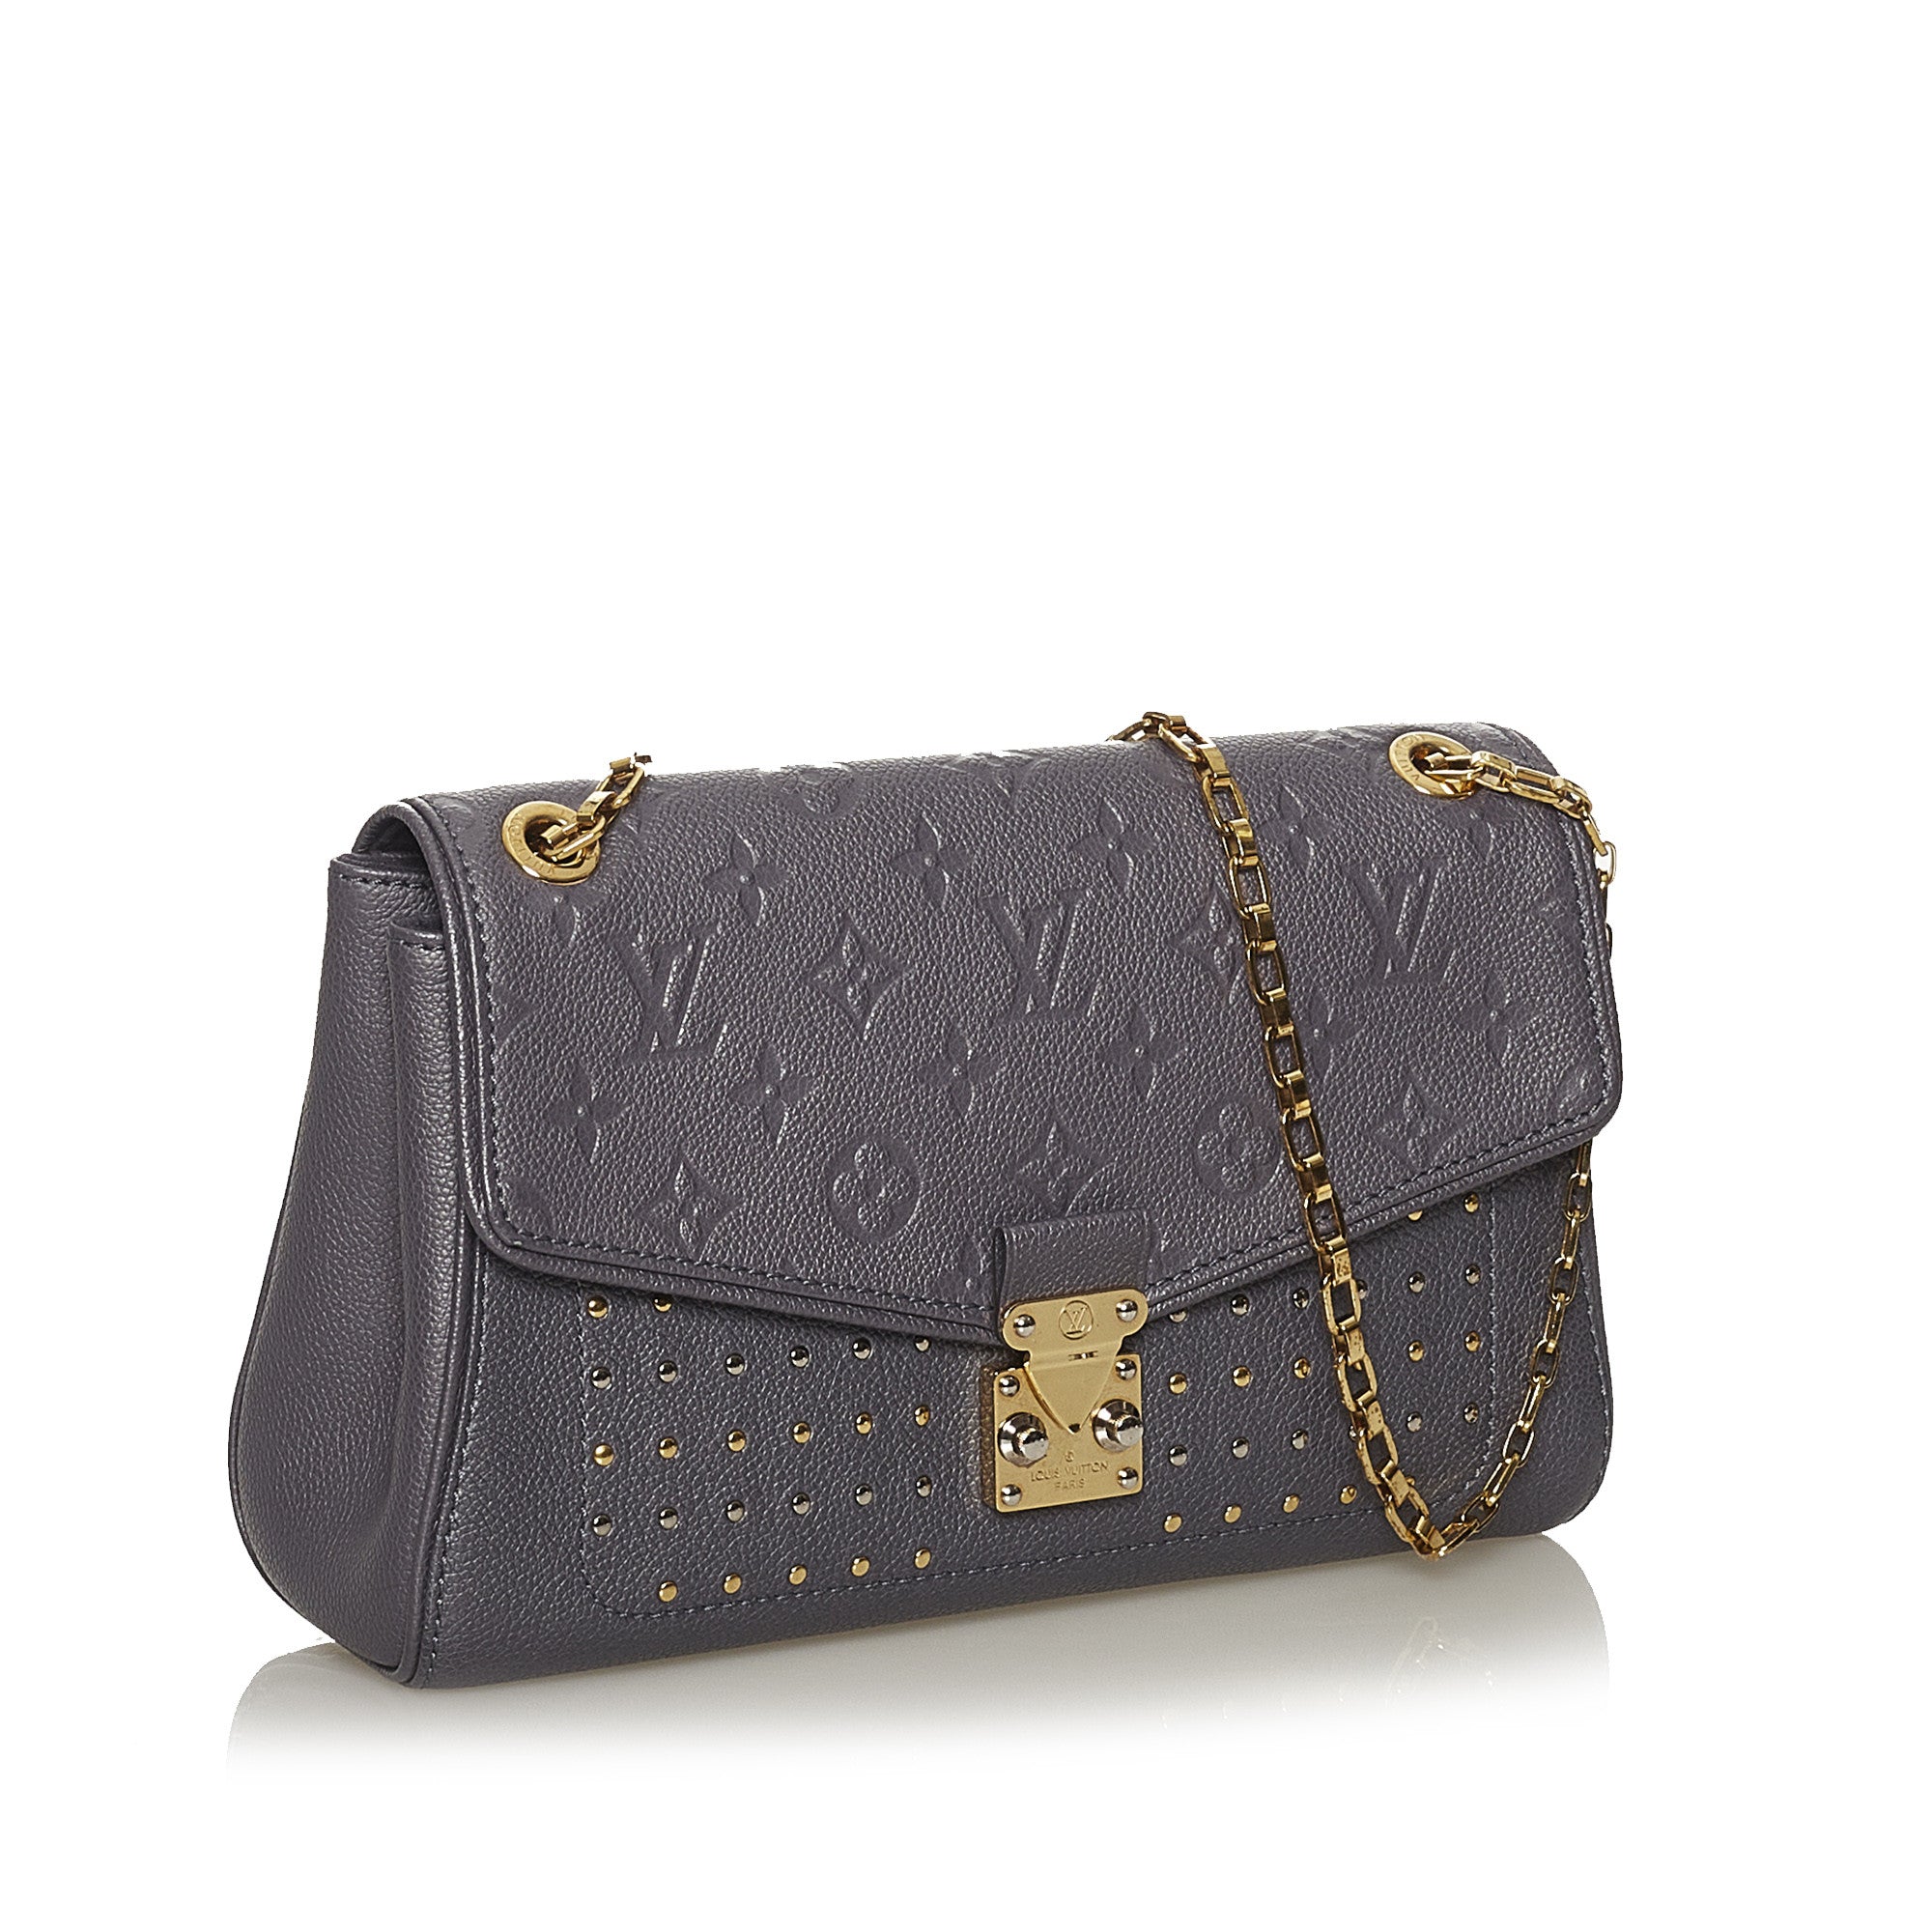 Louis Vuitton, Bags, Bundle Lv Saint Germain Pm Matching Wallet